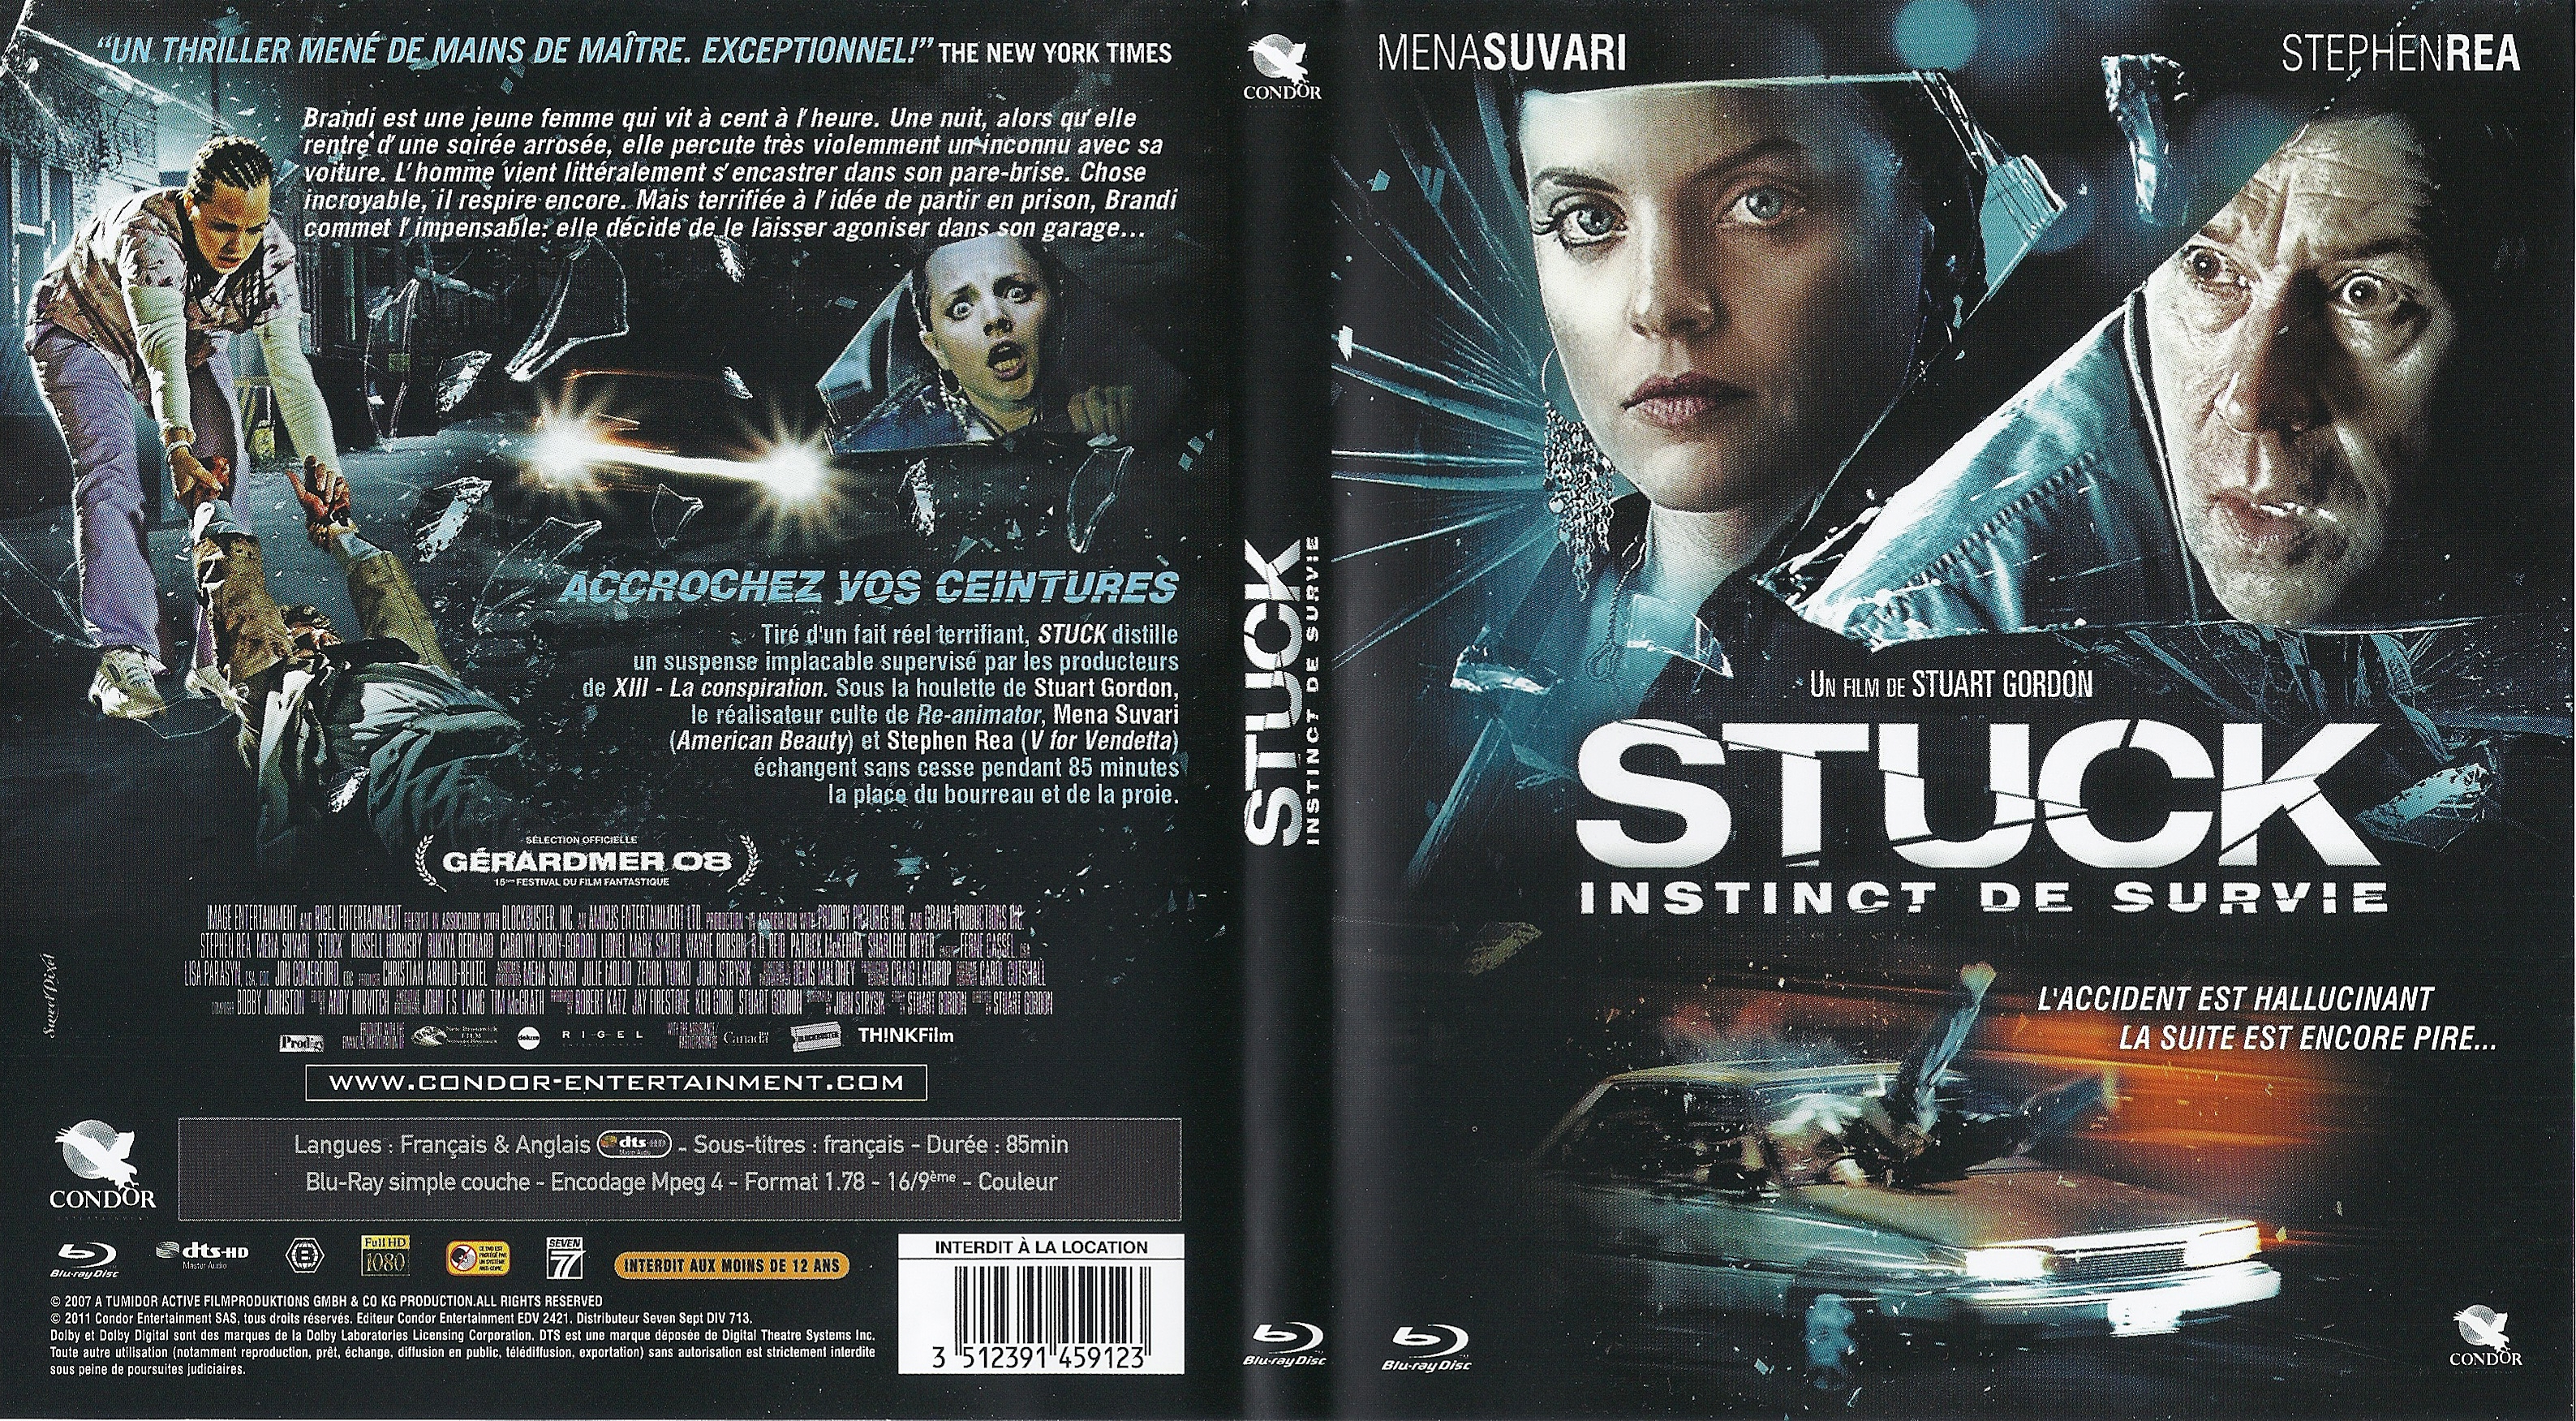 Jaquette DVD Stuck (BLU-RAY)